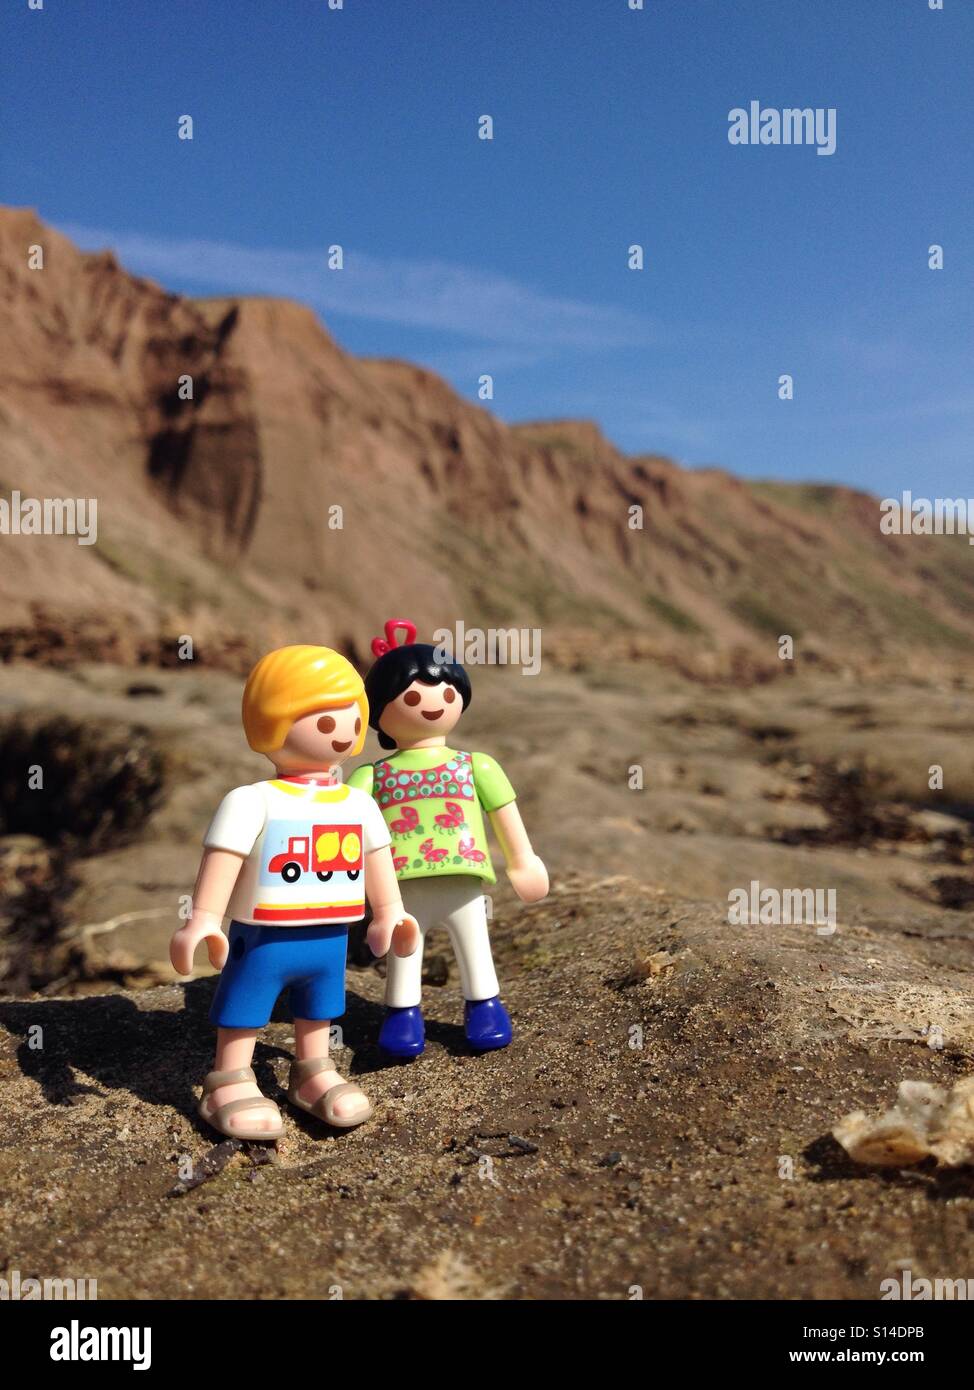 Playmobil figures on rocks Banque D'Images